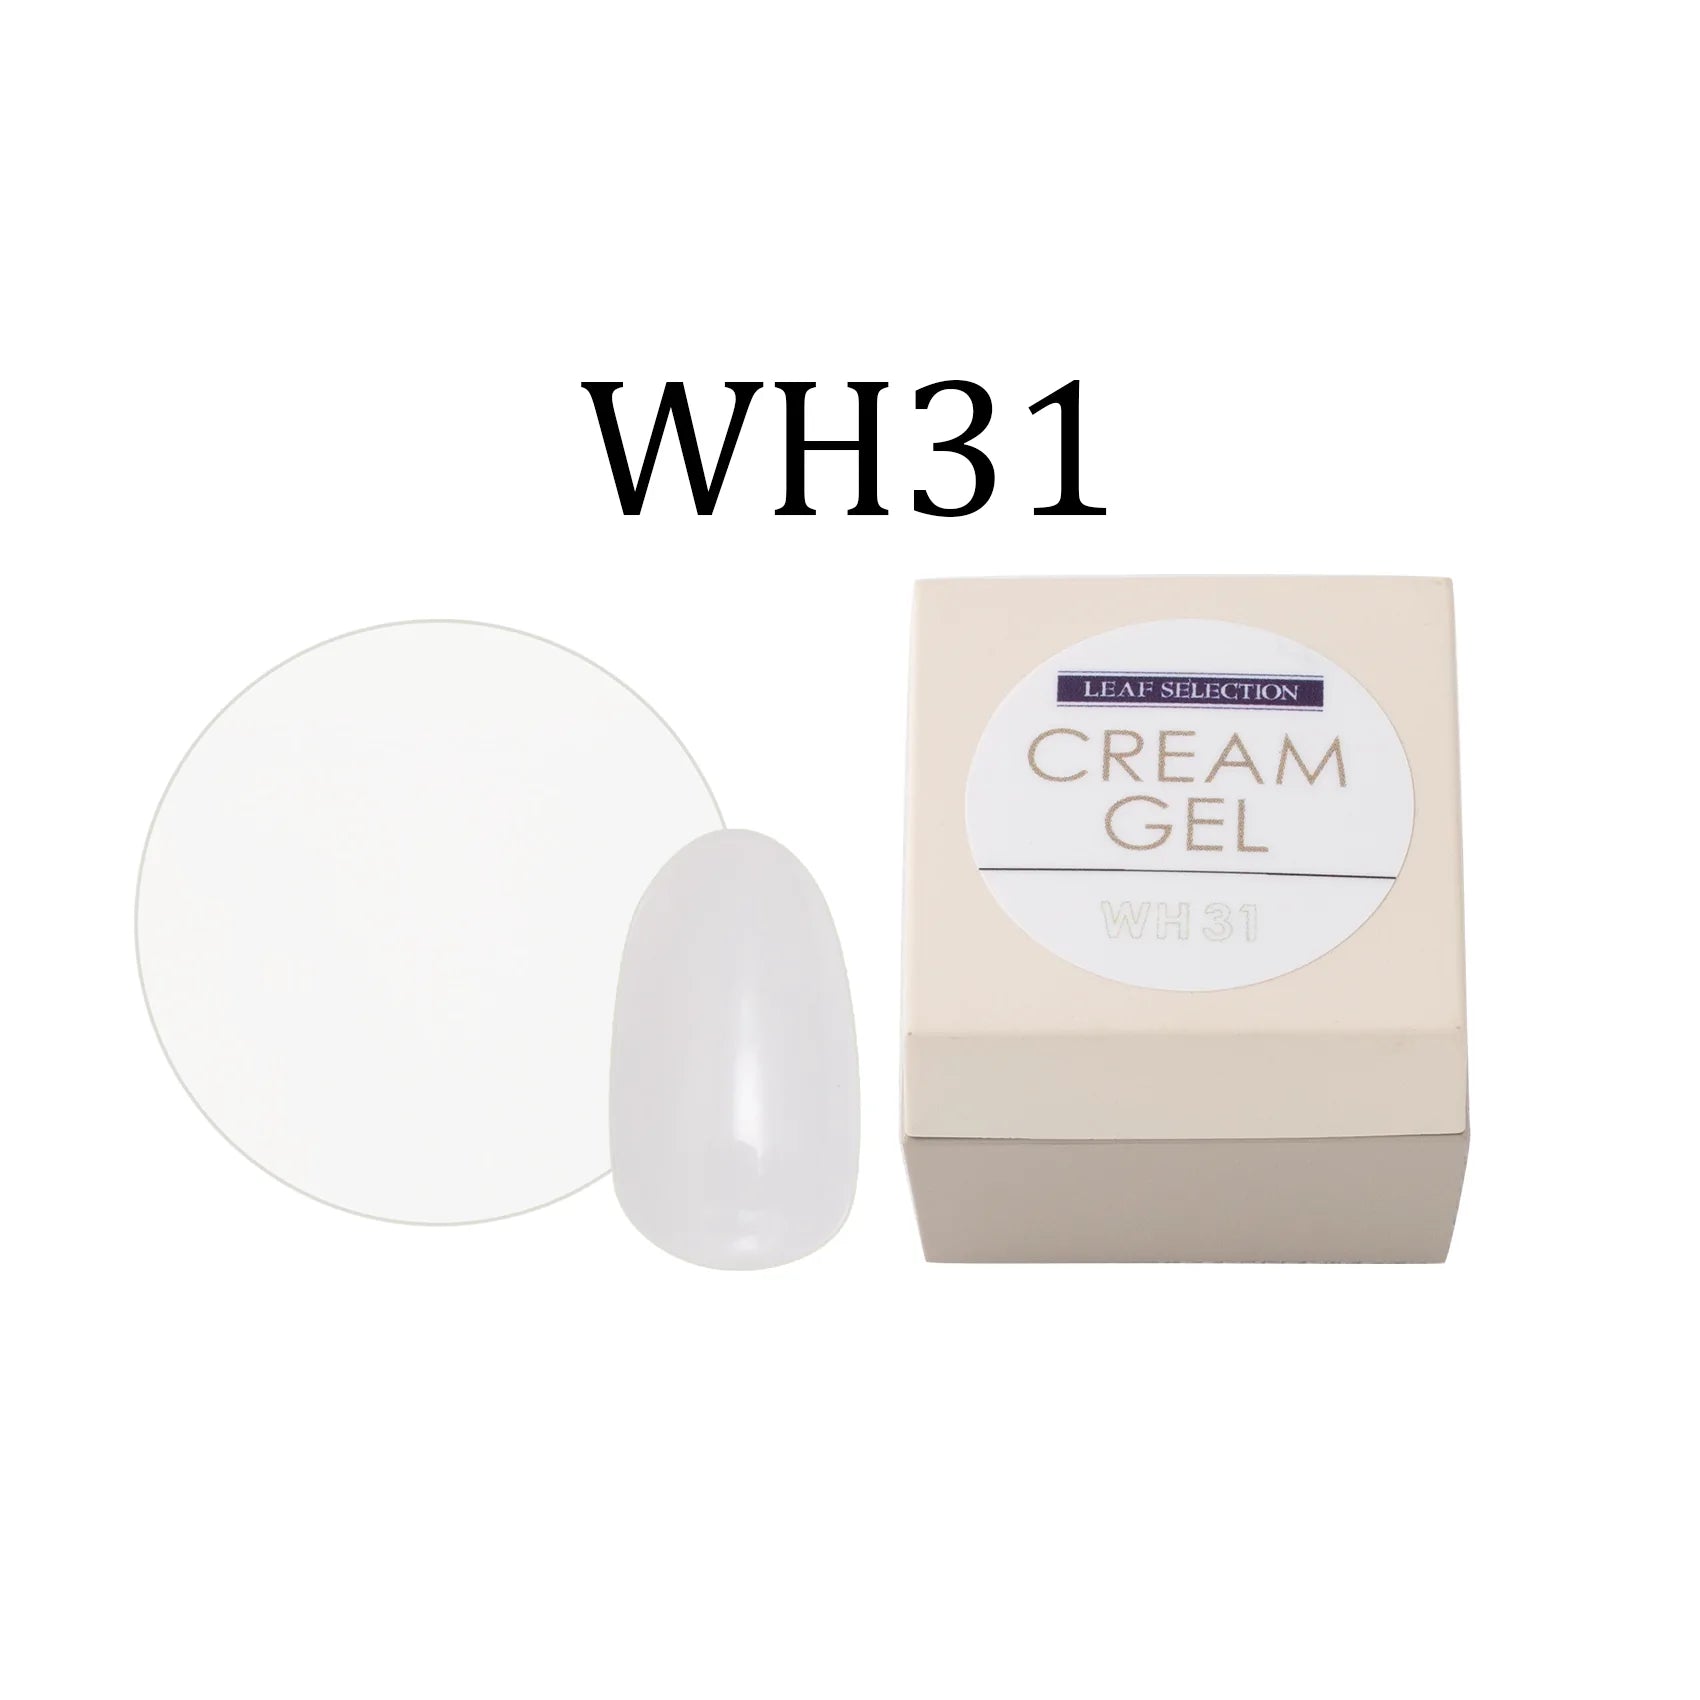 Leafgel Cream Gel [NO extra discount]